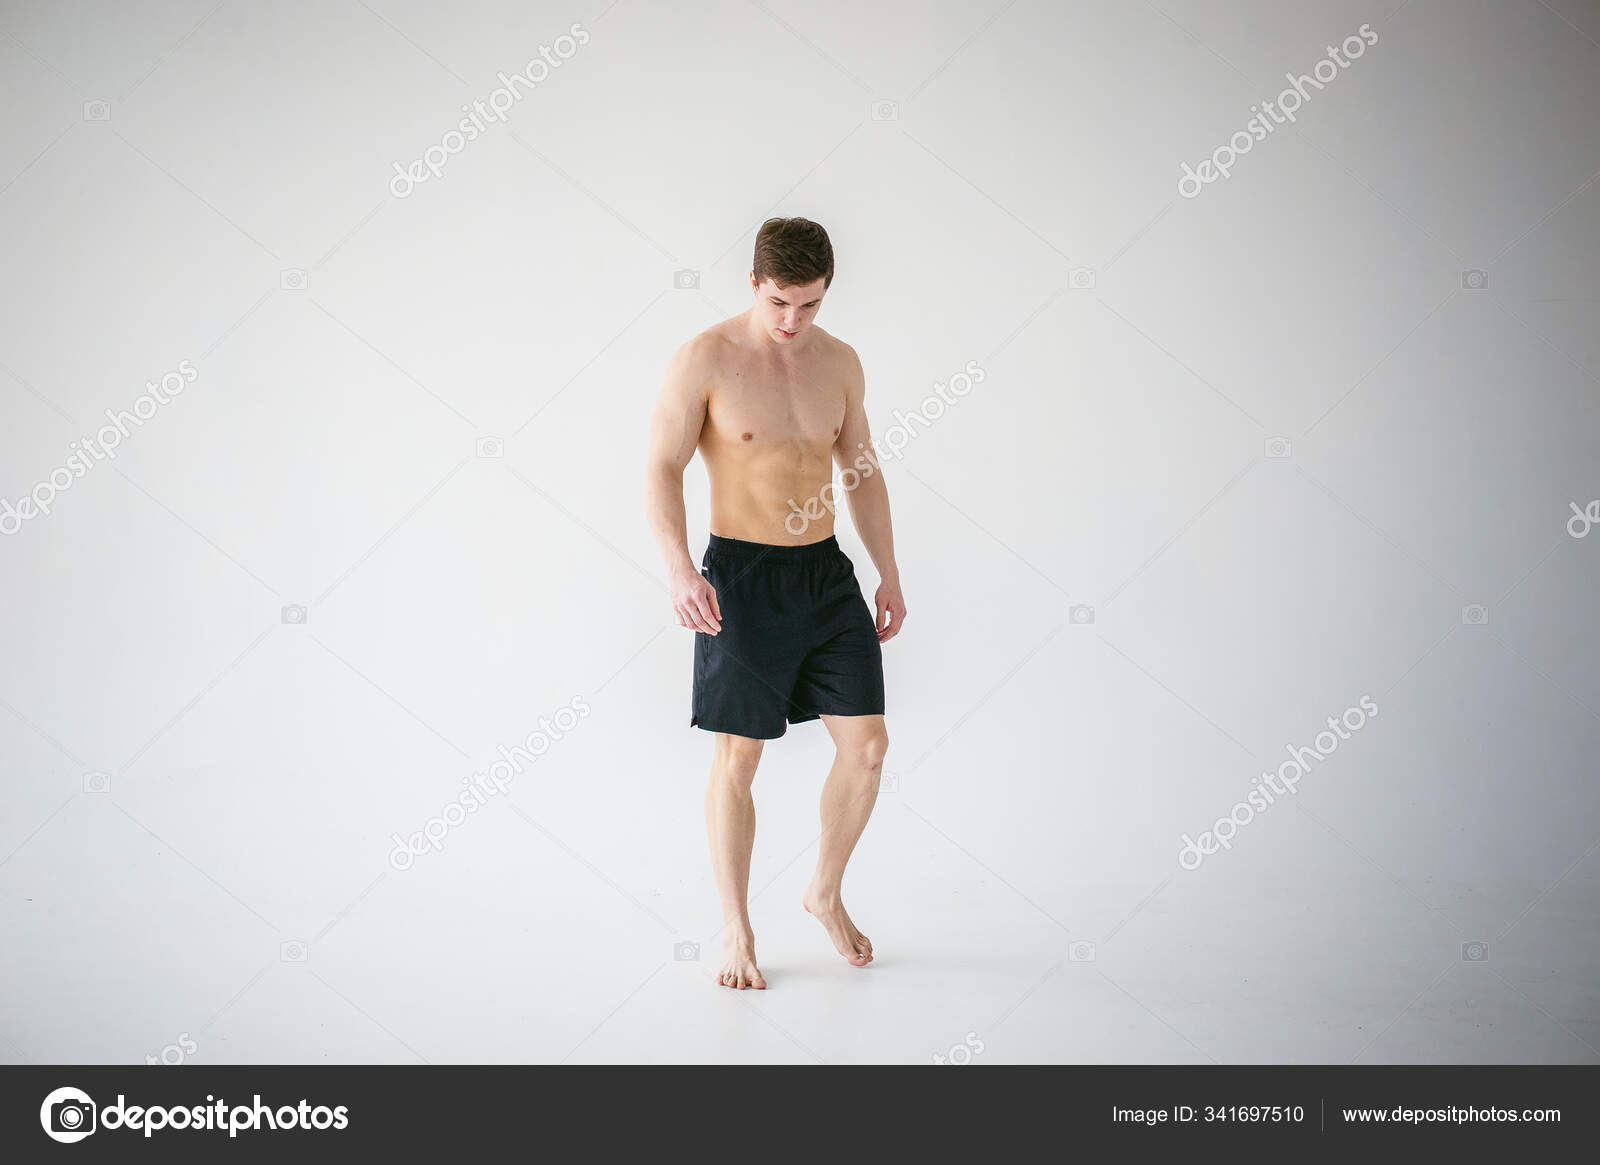 Muscular bonito homem isolado no fundo preto fotos 